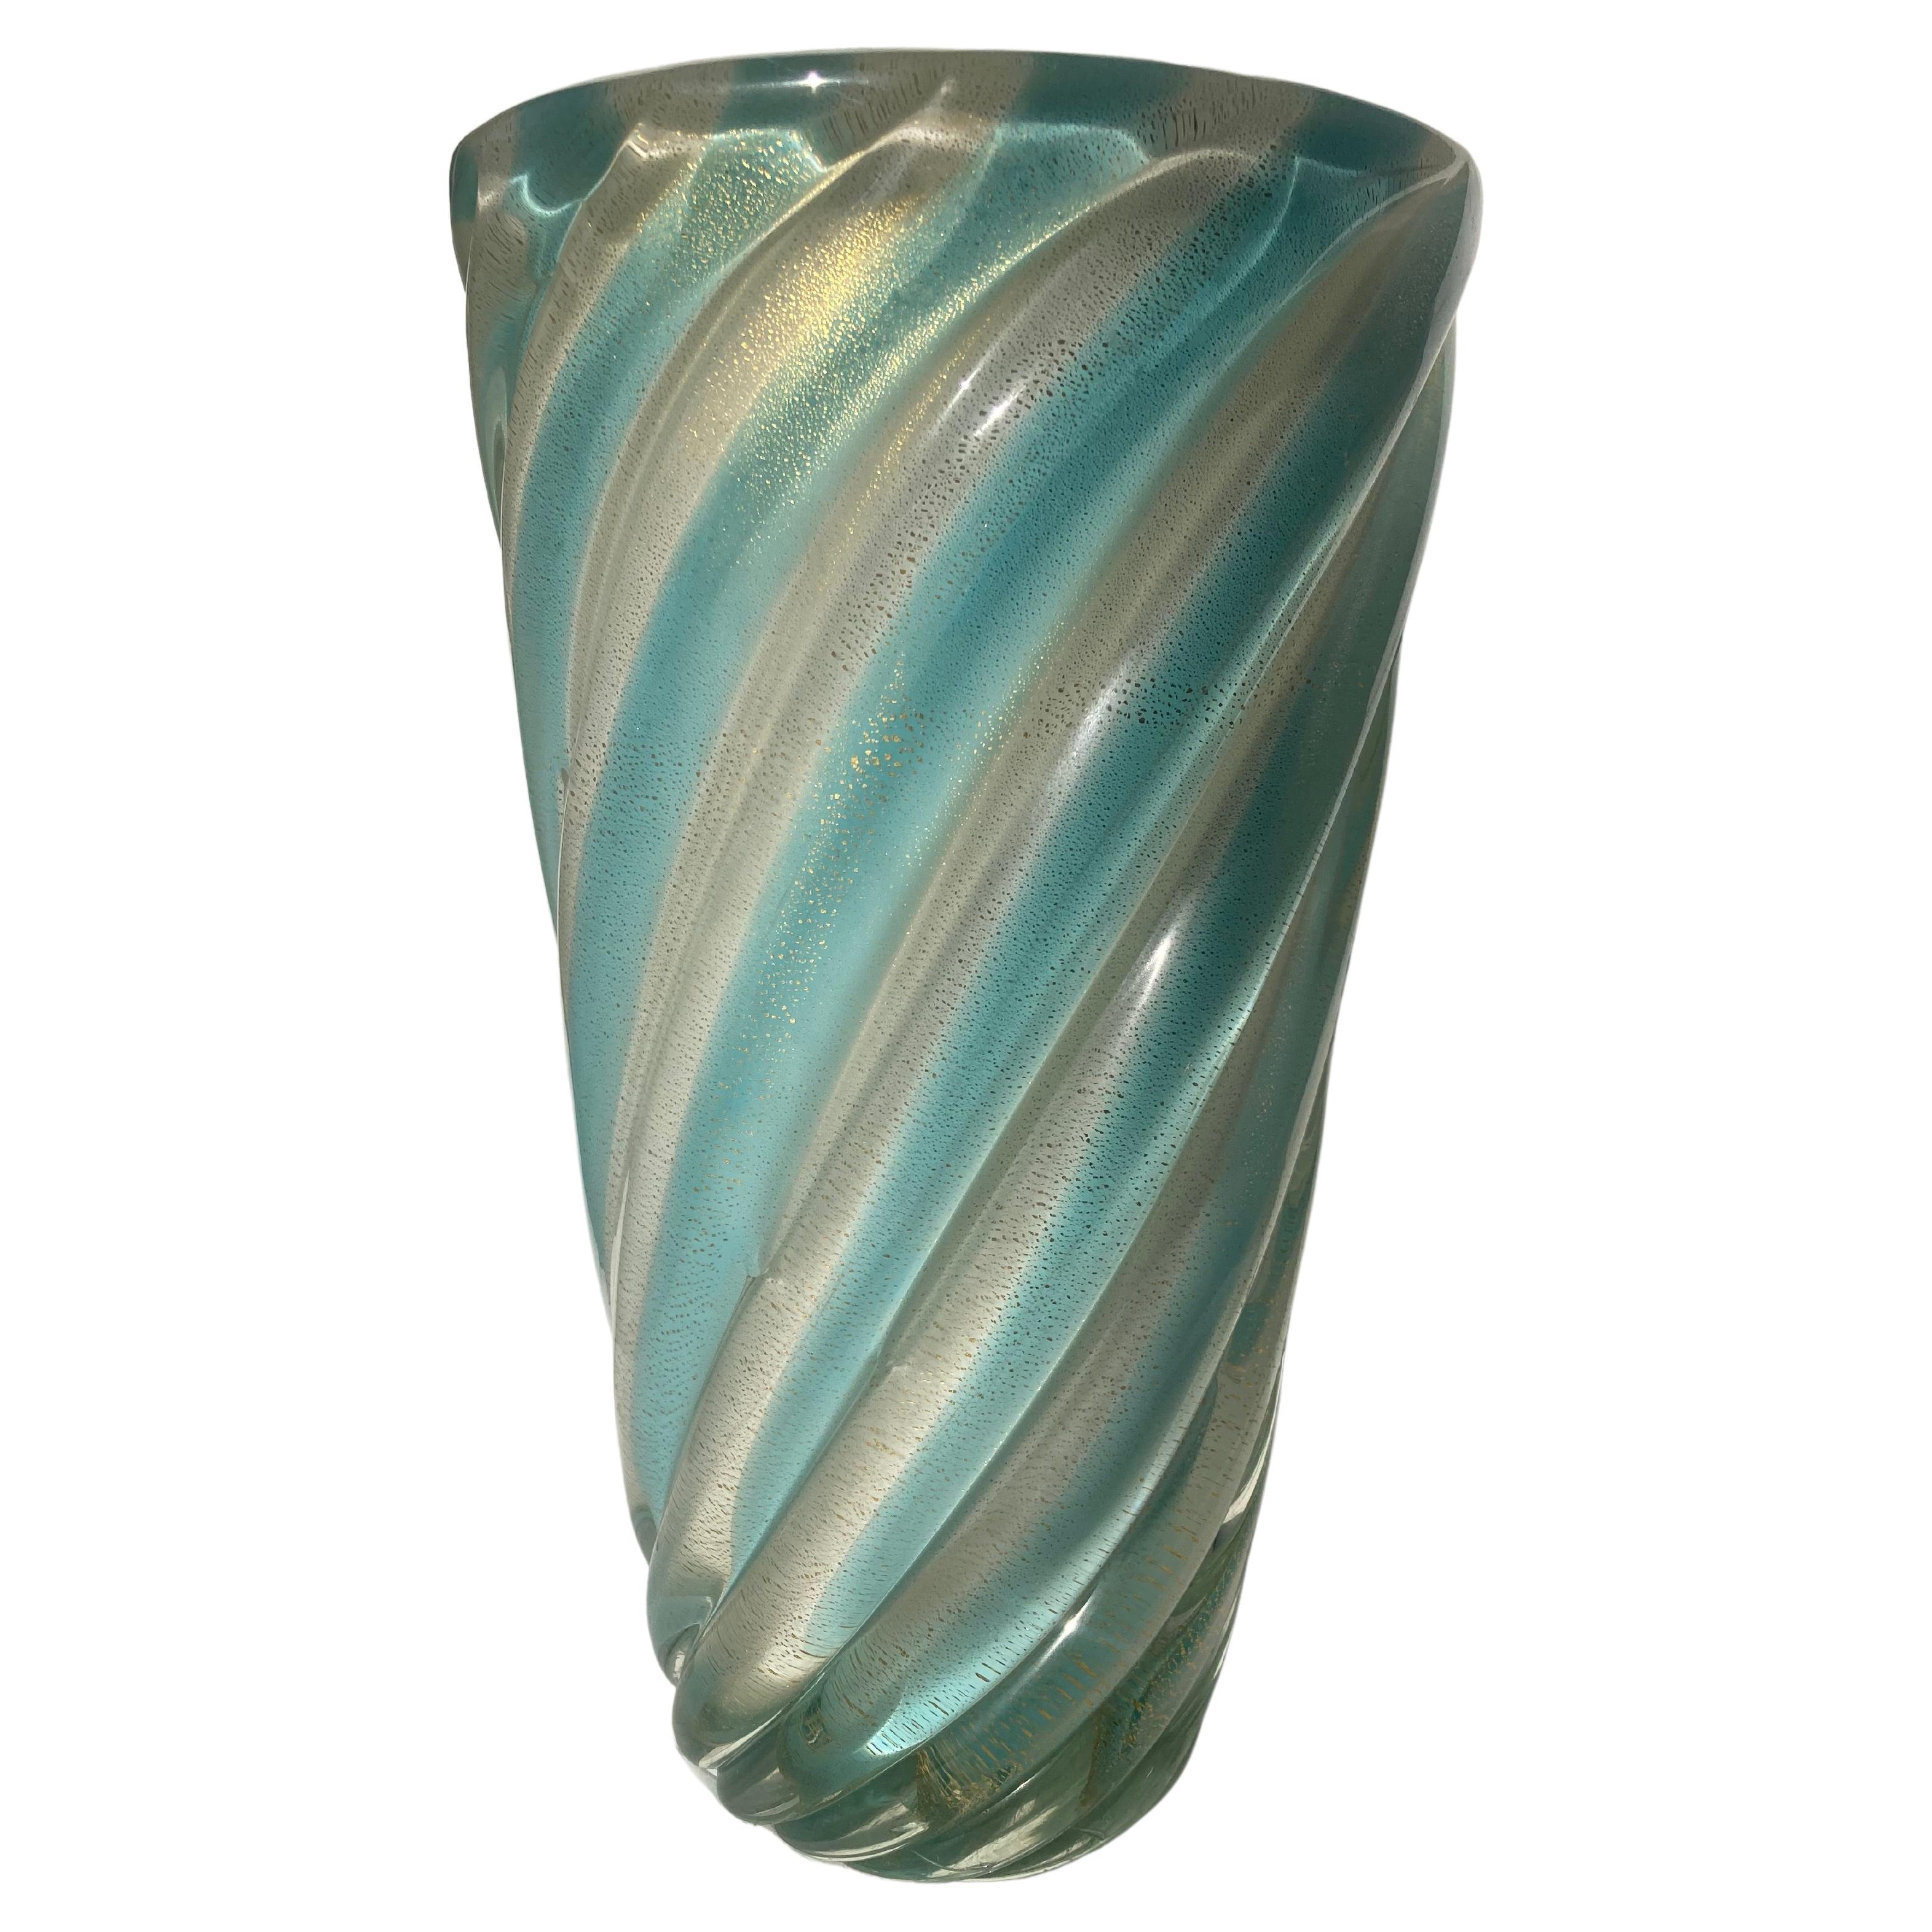 Archimede Seguso - Grand vase en verre de Murano à éclats dorés et opalin